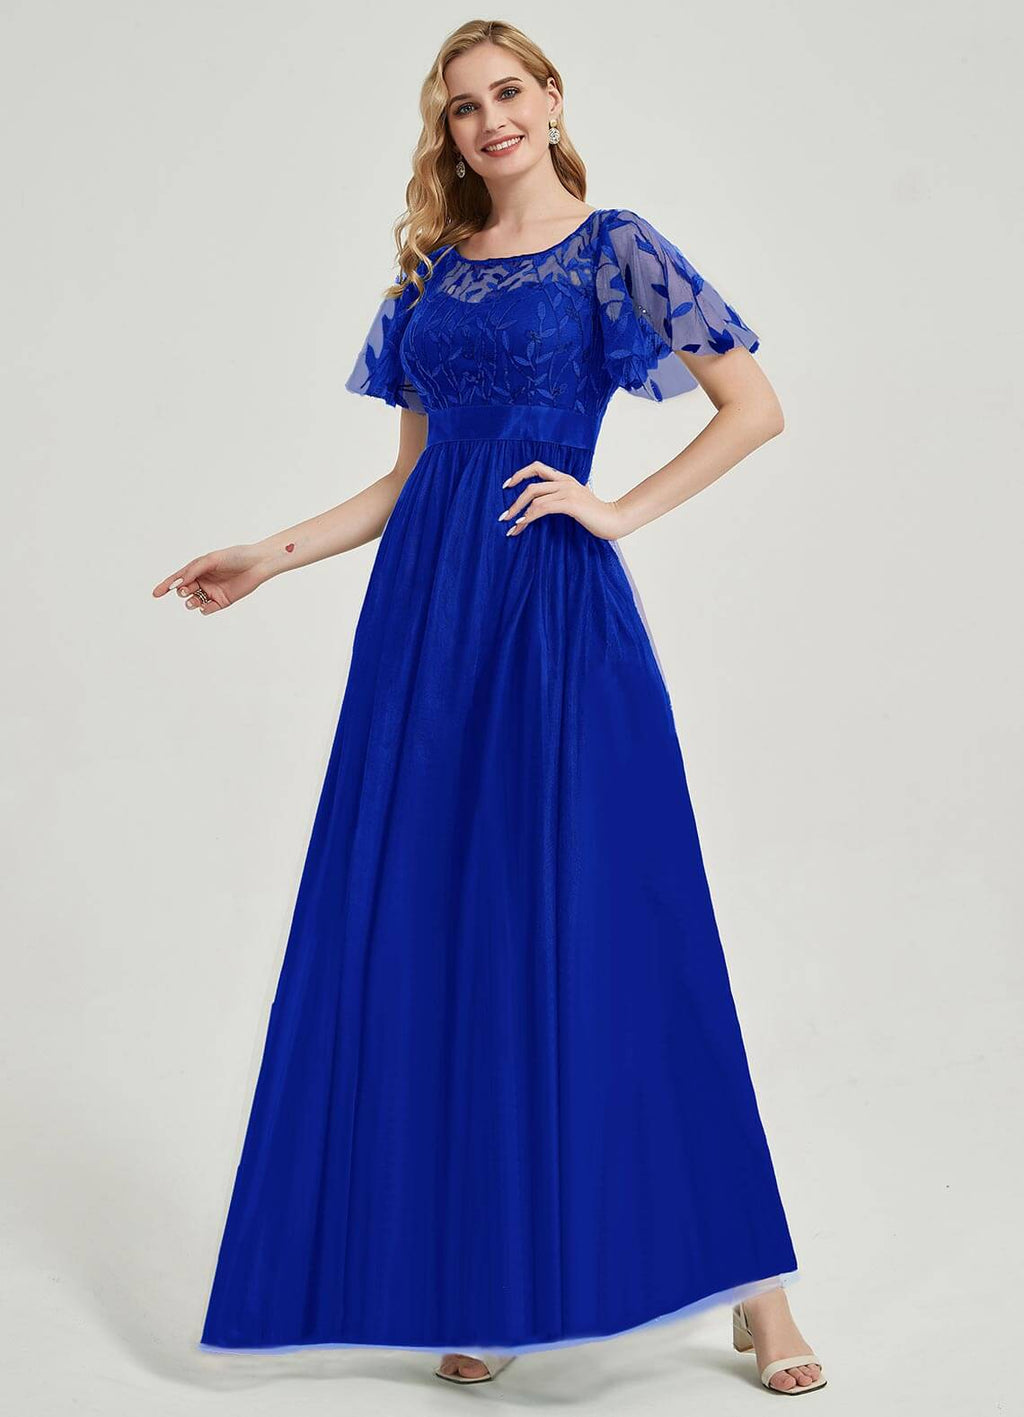 NZ Bridal Sapphire Blue Sequin Tulle A Line Prom Dress 00904EP Miyuki a